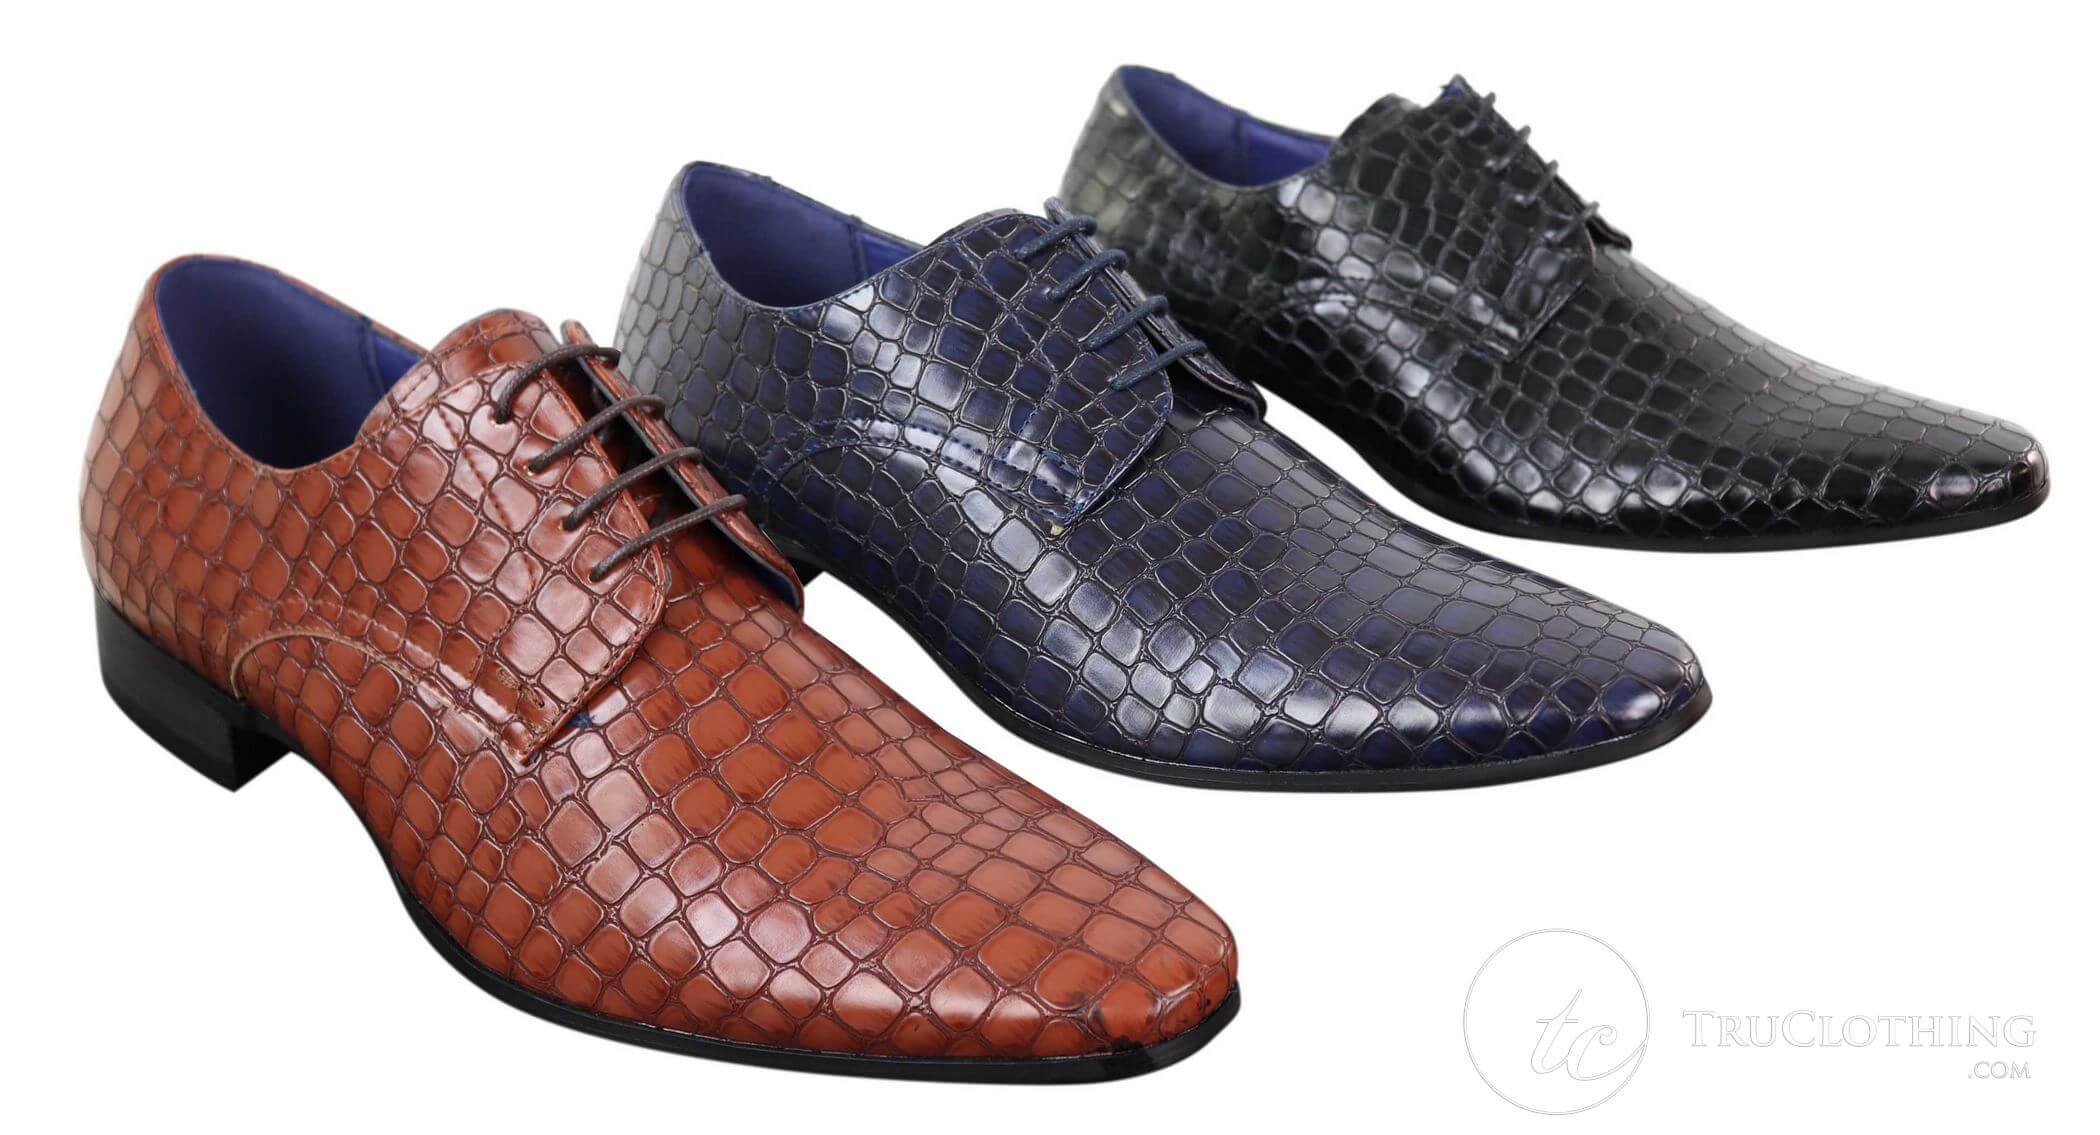 Mens Crocodile Shoes - Mens Crocodile Skin Shoes